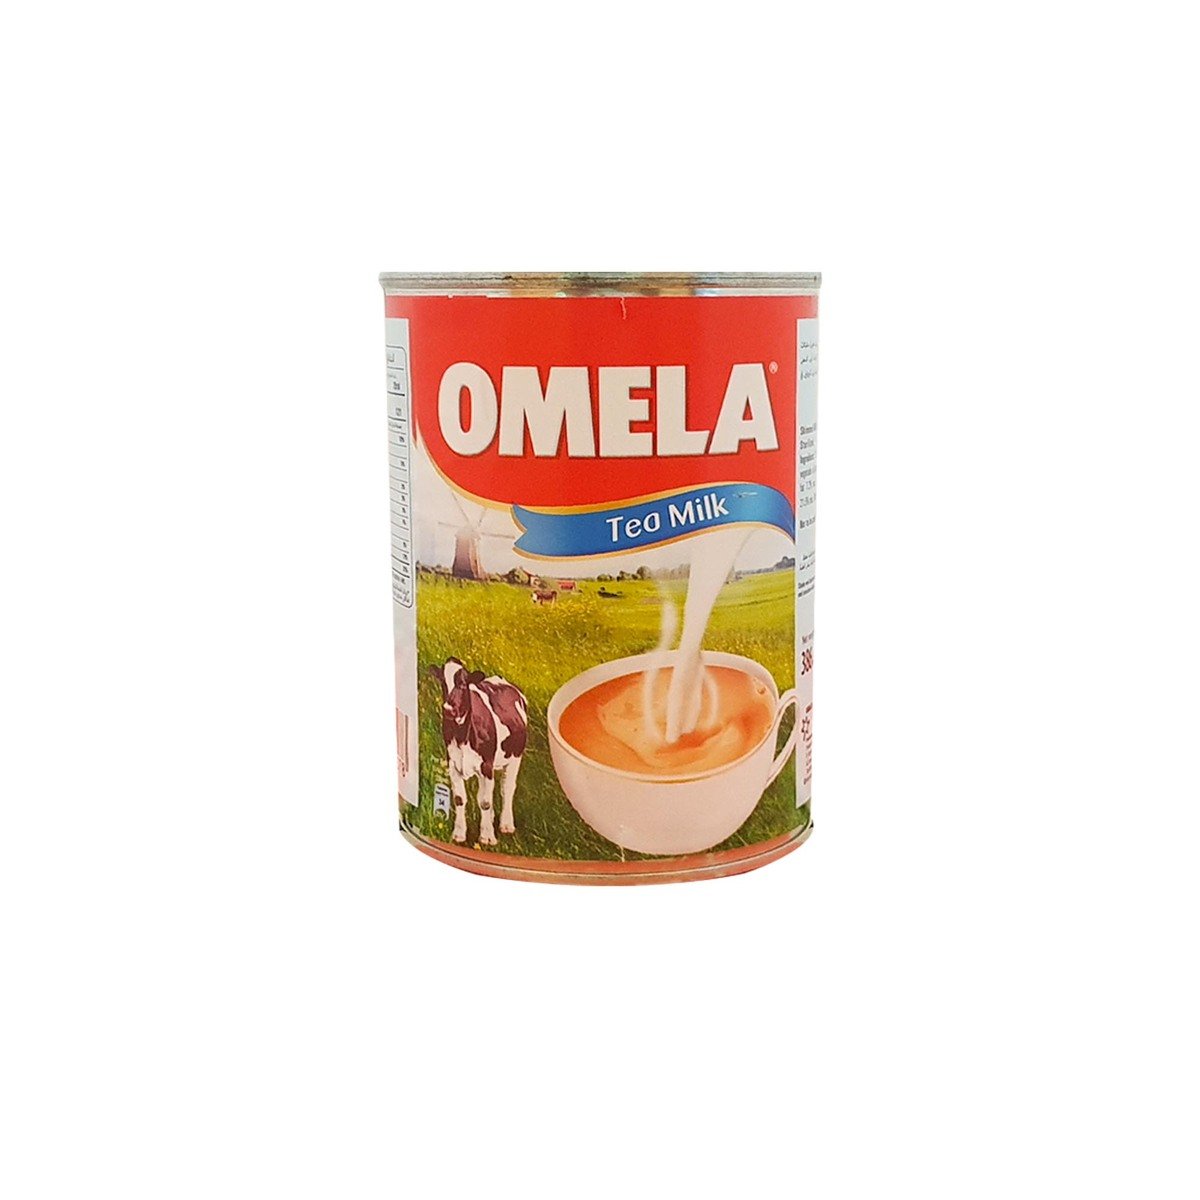 Omela Tea Milk 48 x 405g